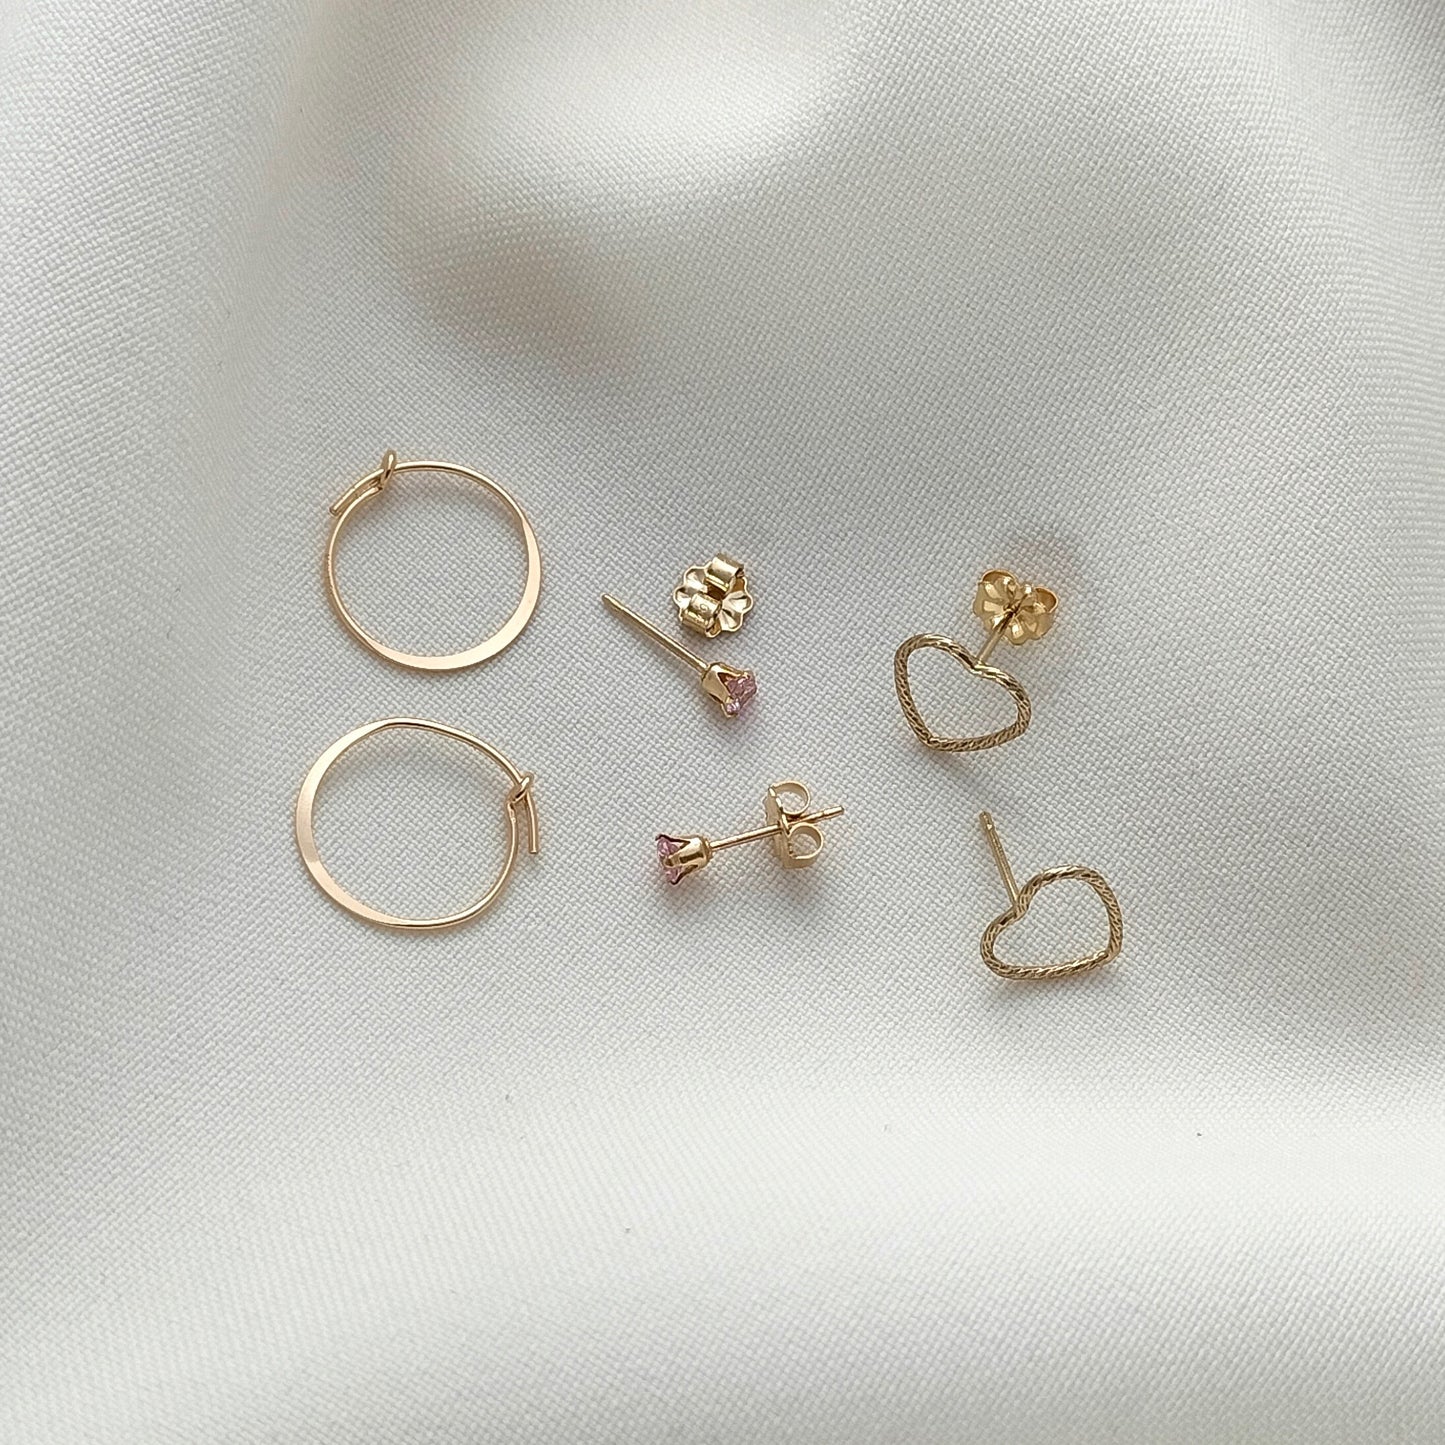 Gold Heart earring set